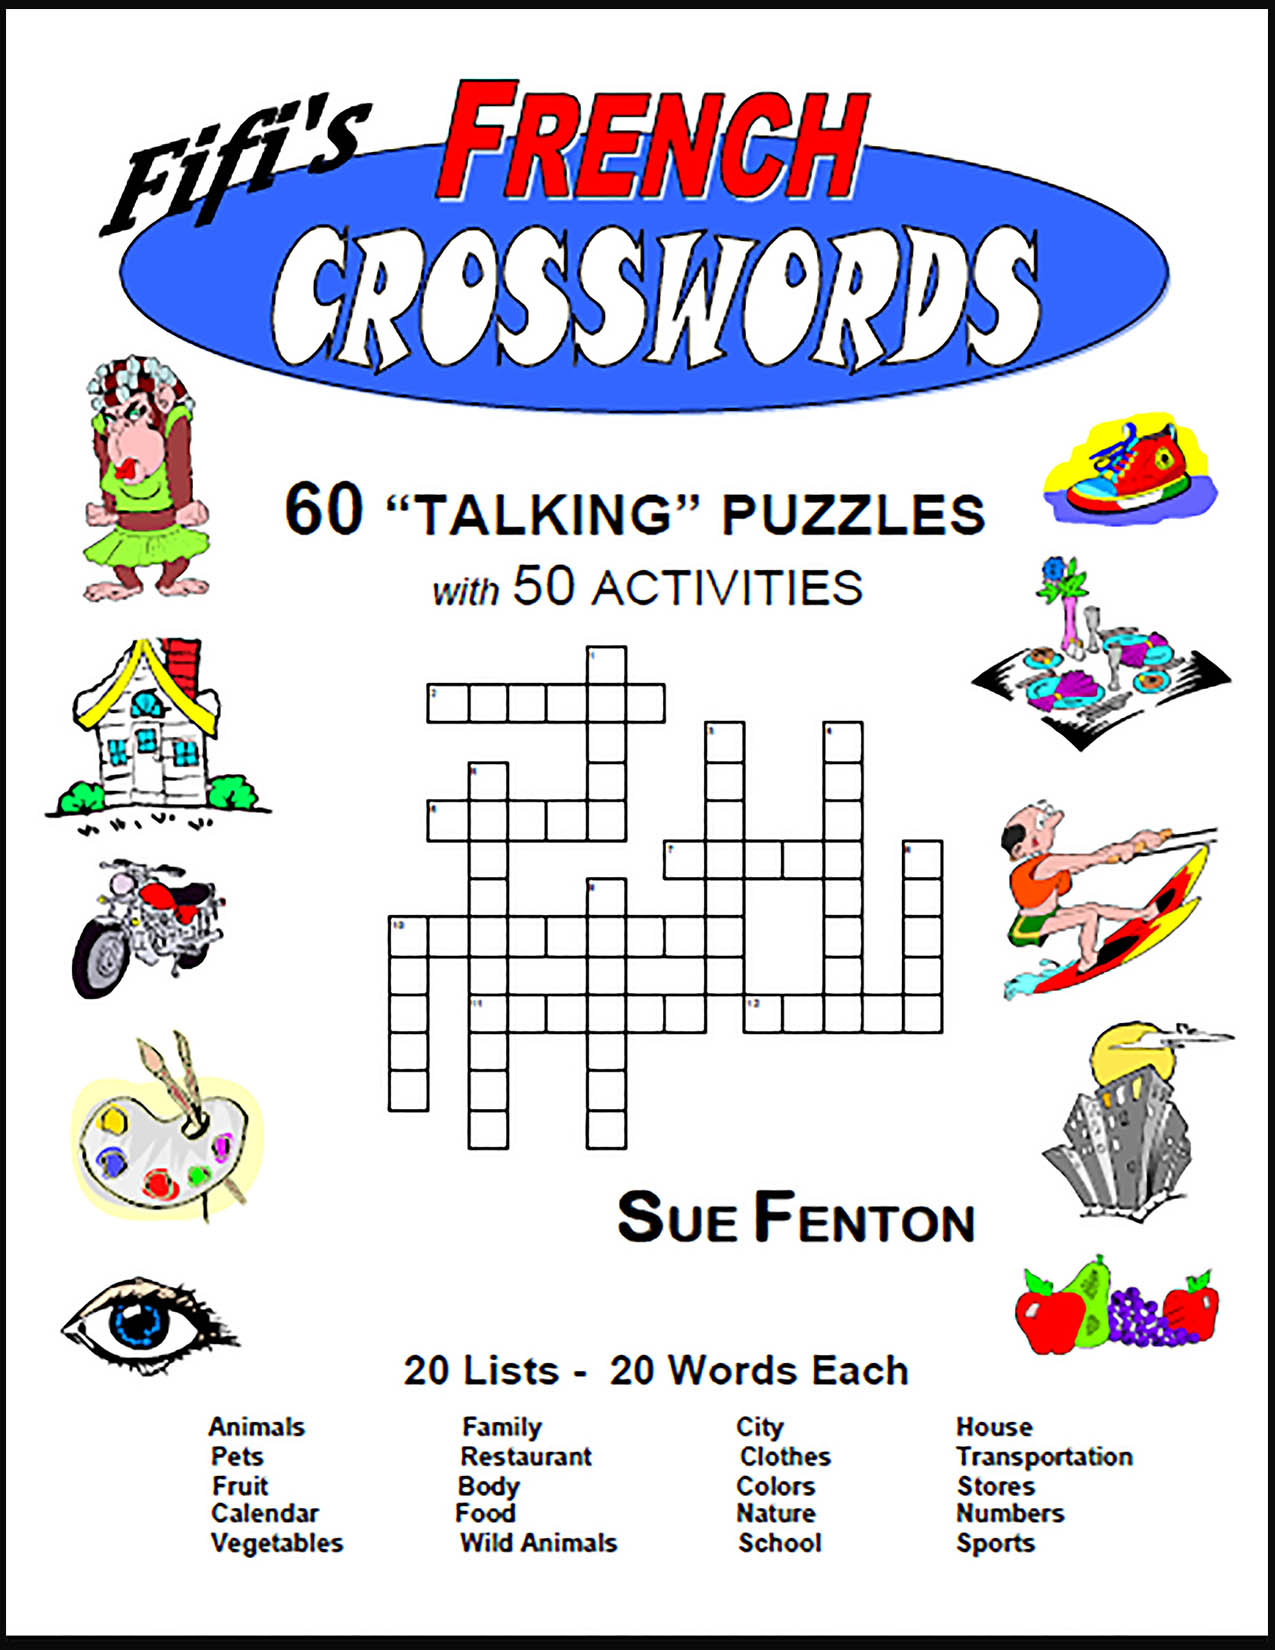 FRENCH CROSSWORDS Creative "Talking" Crossword Puzzles